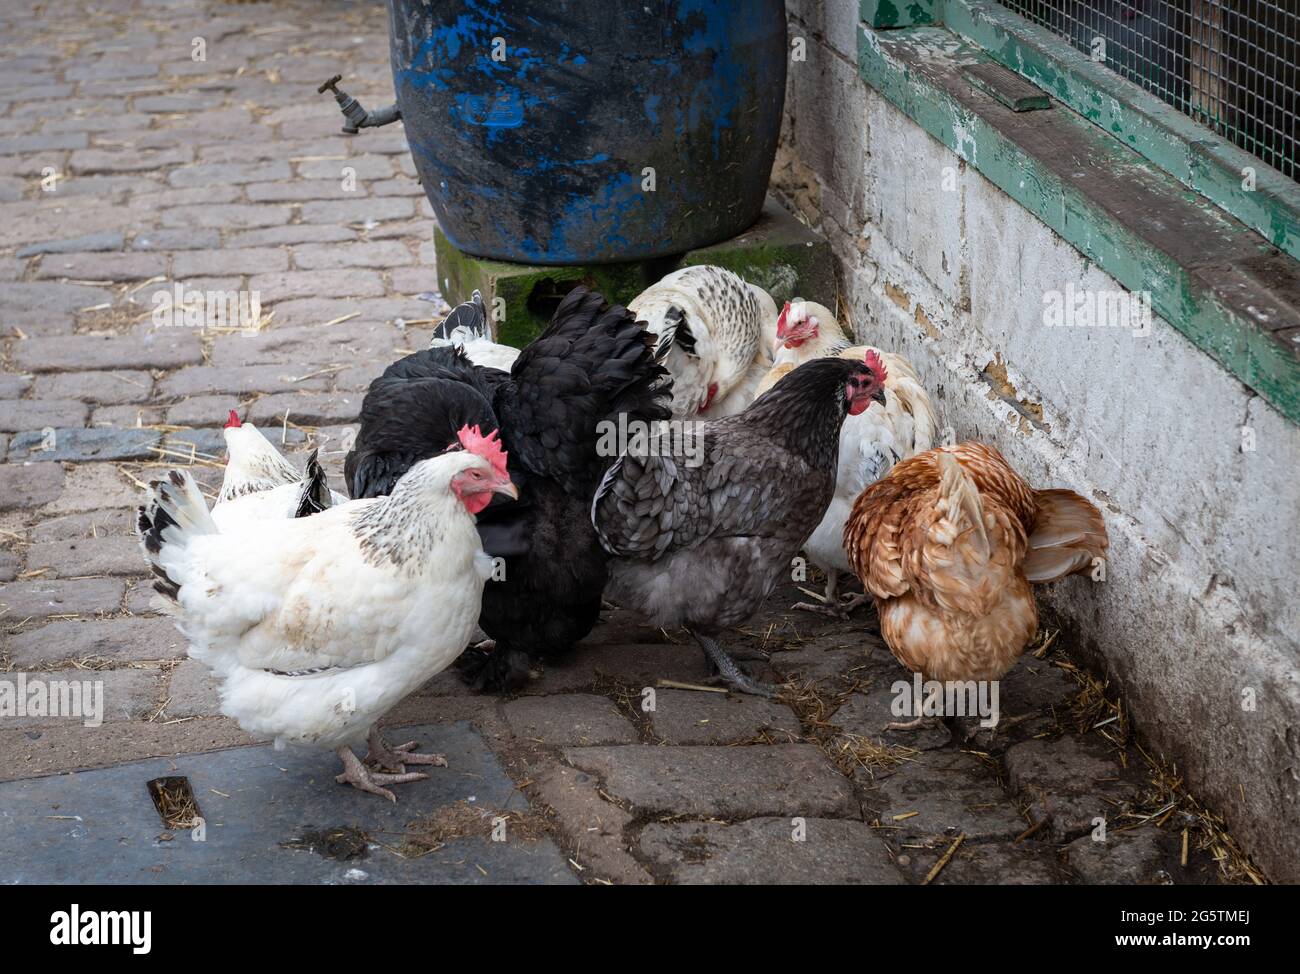 Freerange hens roaming freely in a farmyard. Stock Photo